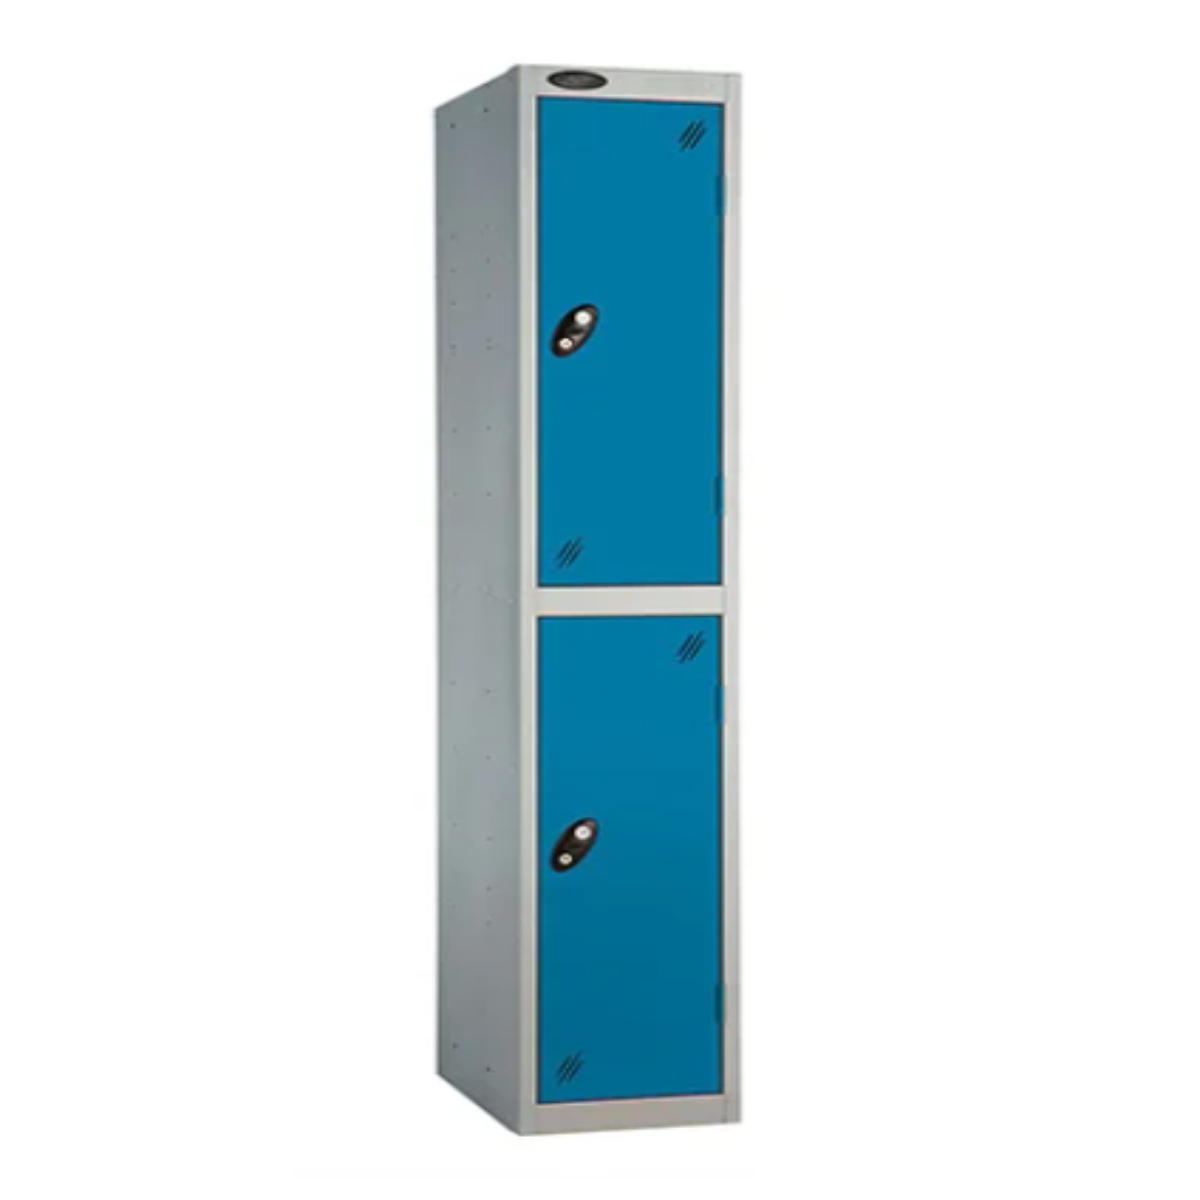 NEW Probe 2 door personal lockers cw keys 1780Hx305Wx460D BLUE and GREY